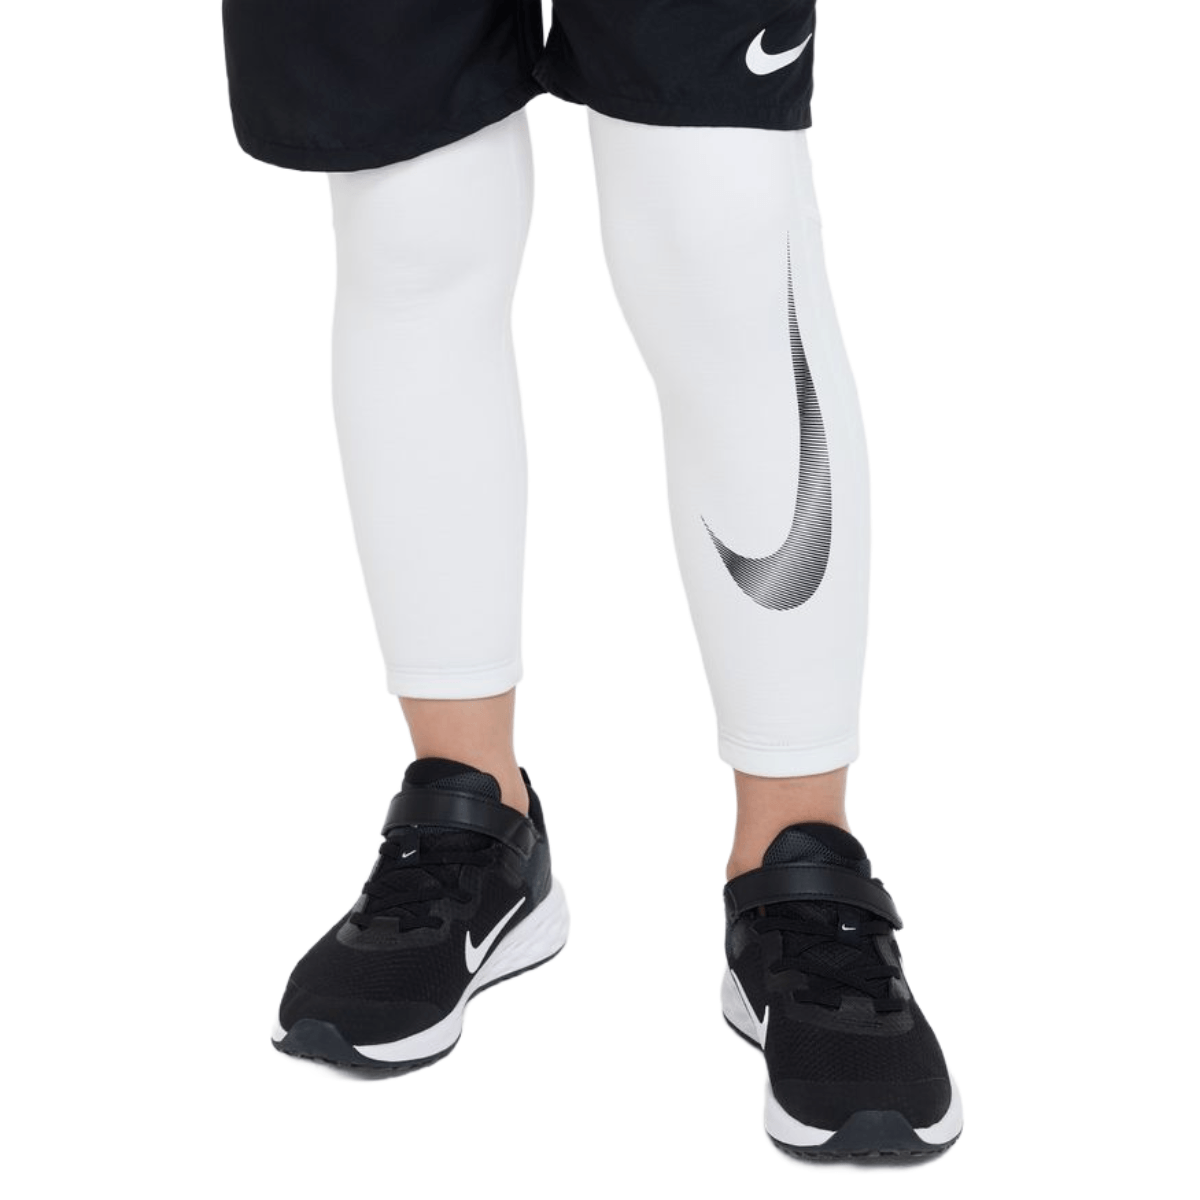 Nike Tights PRO WARM in black